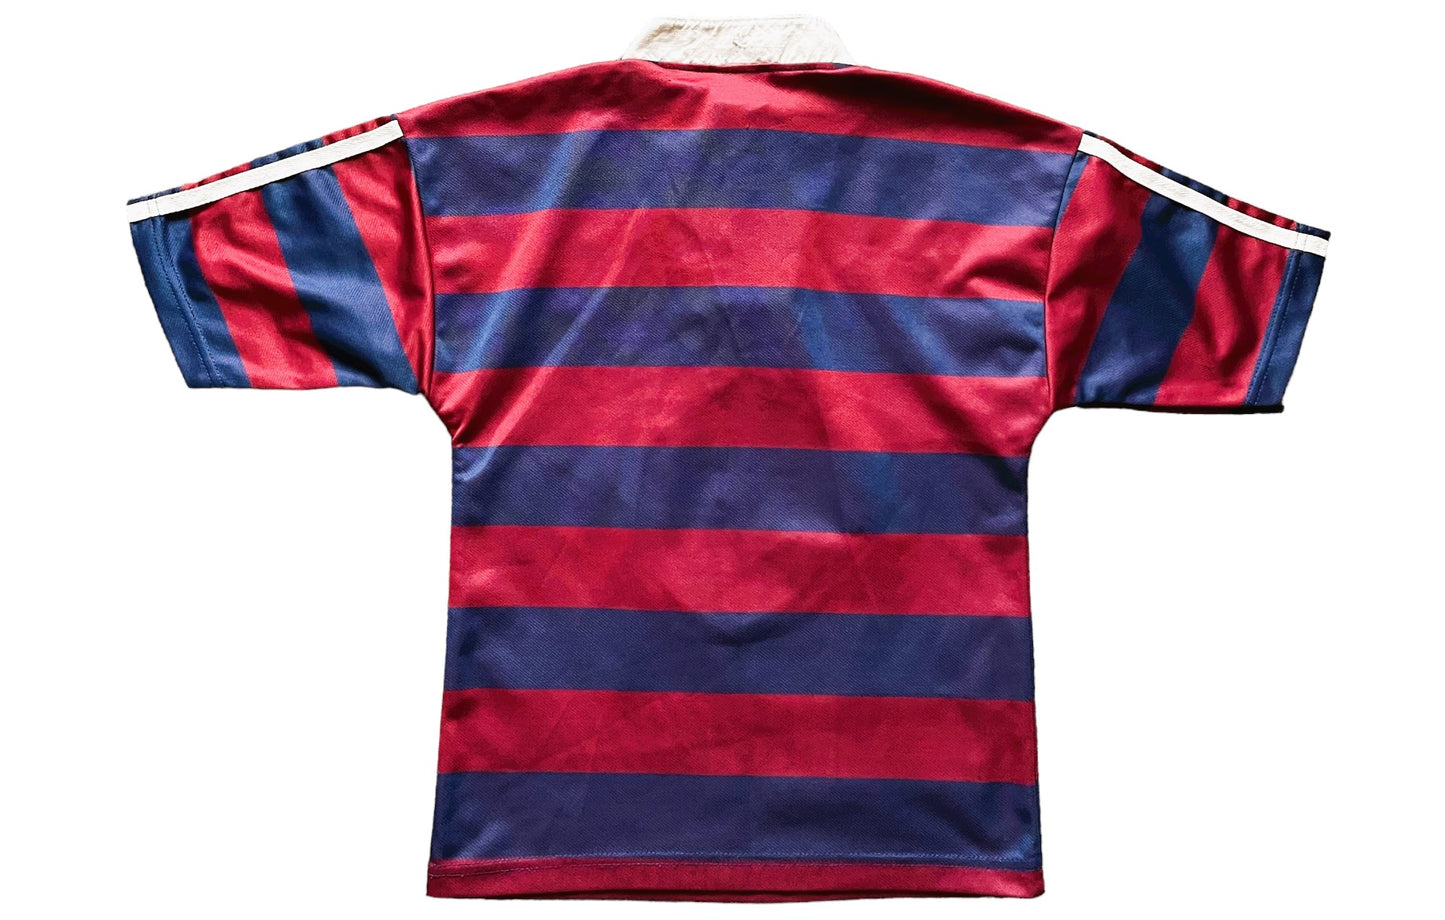 Newcastle Away Shirt 1995 (very good) XXSmall (kids)